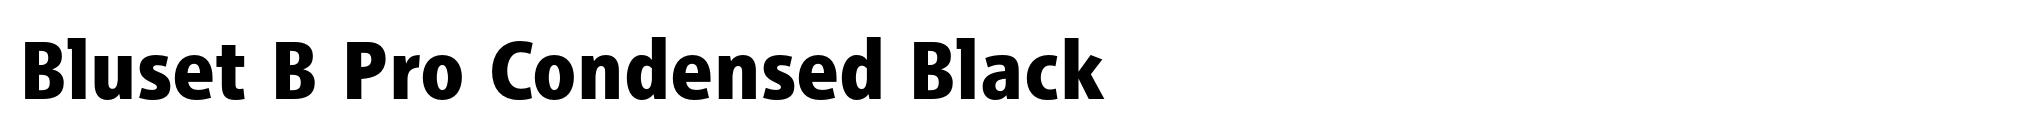 Bluset B Pro Condensed Black image